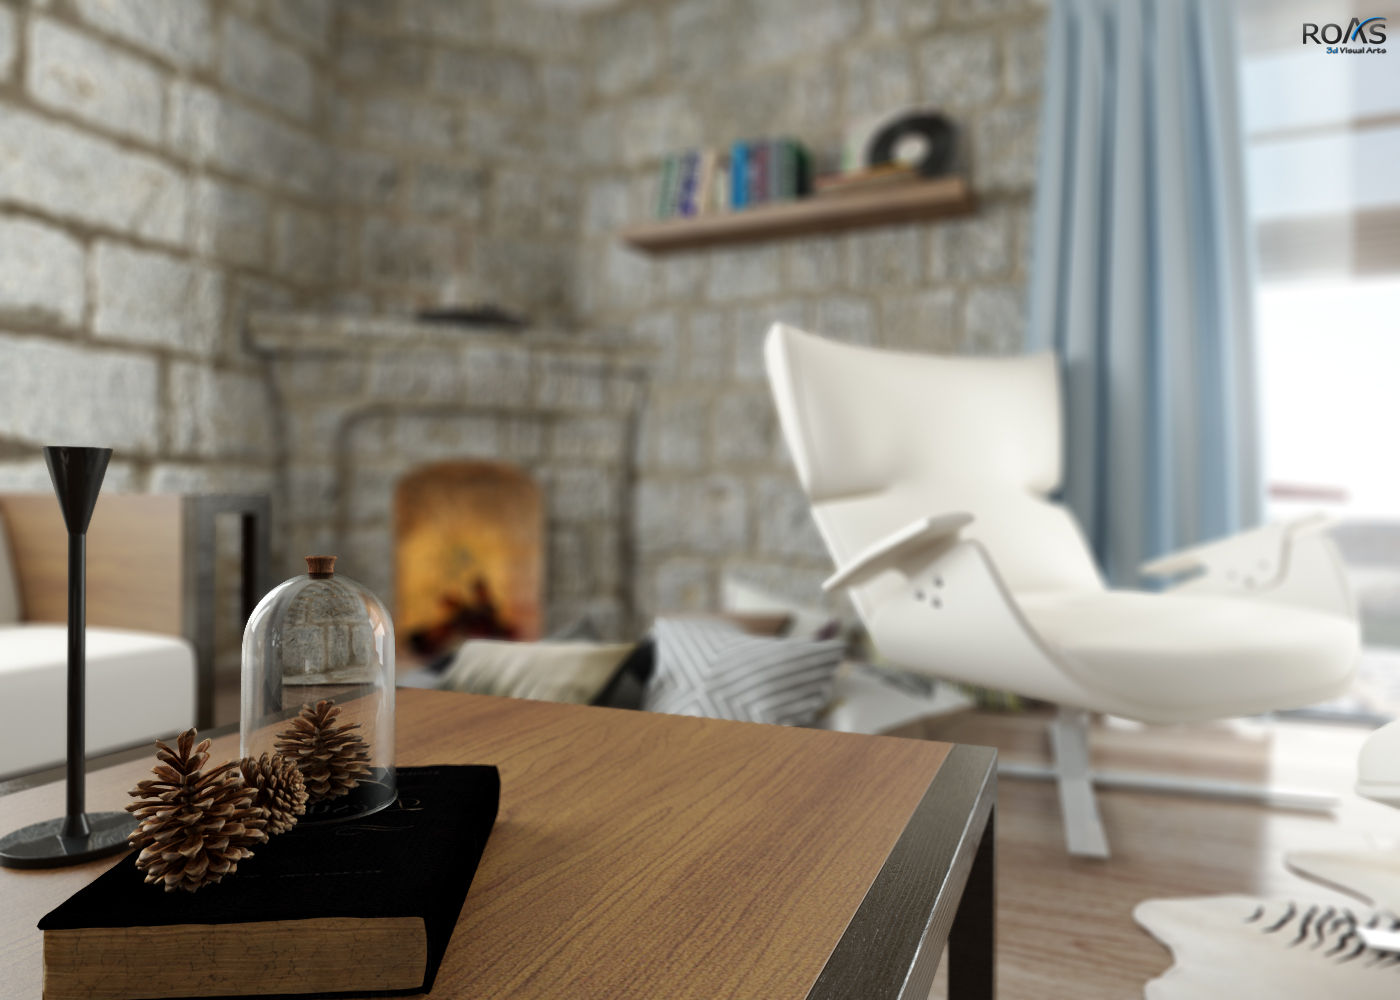 INTERIOR DESIGN FOR IMAR INSAAT, ROAS ARCHITECTURE 3D DESIGN AGENCY ROAS ARCHITECTURE 3D DESIGN AGENCY Mediterranean style living room